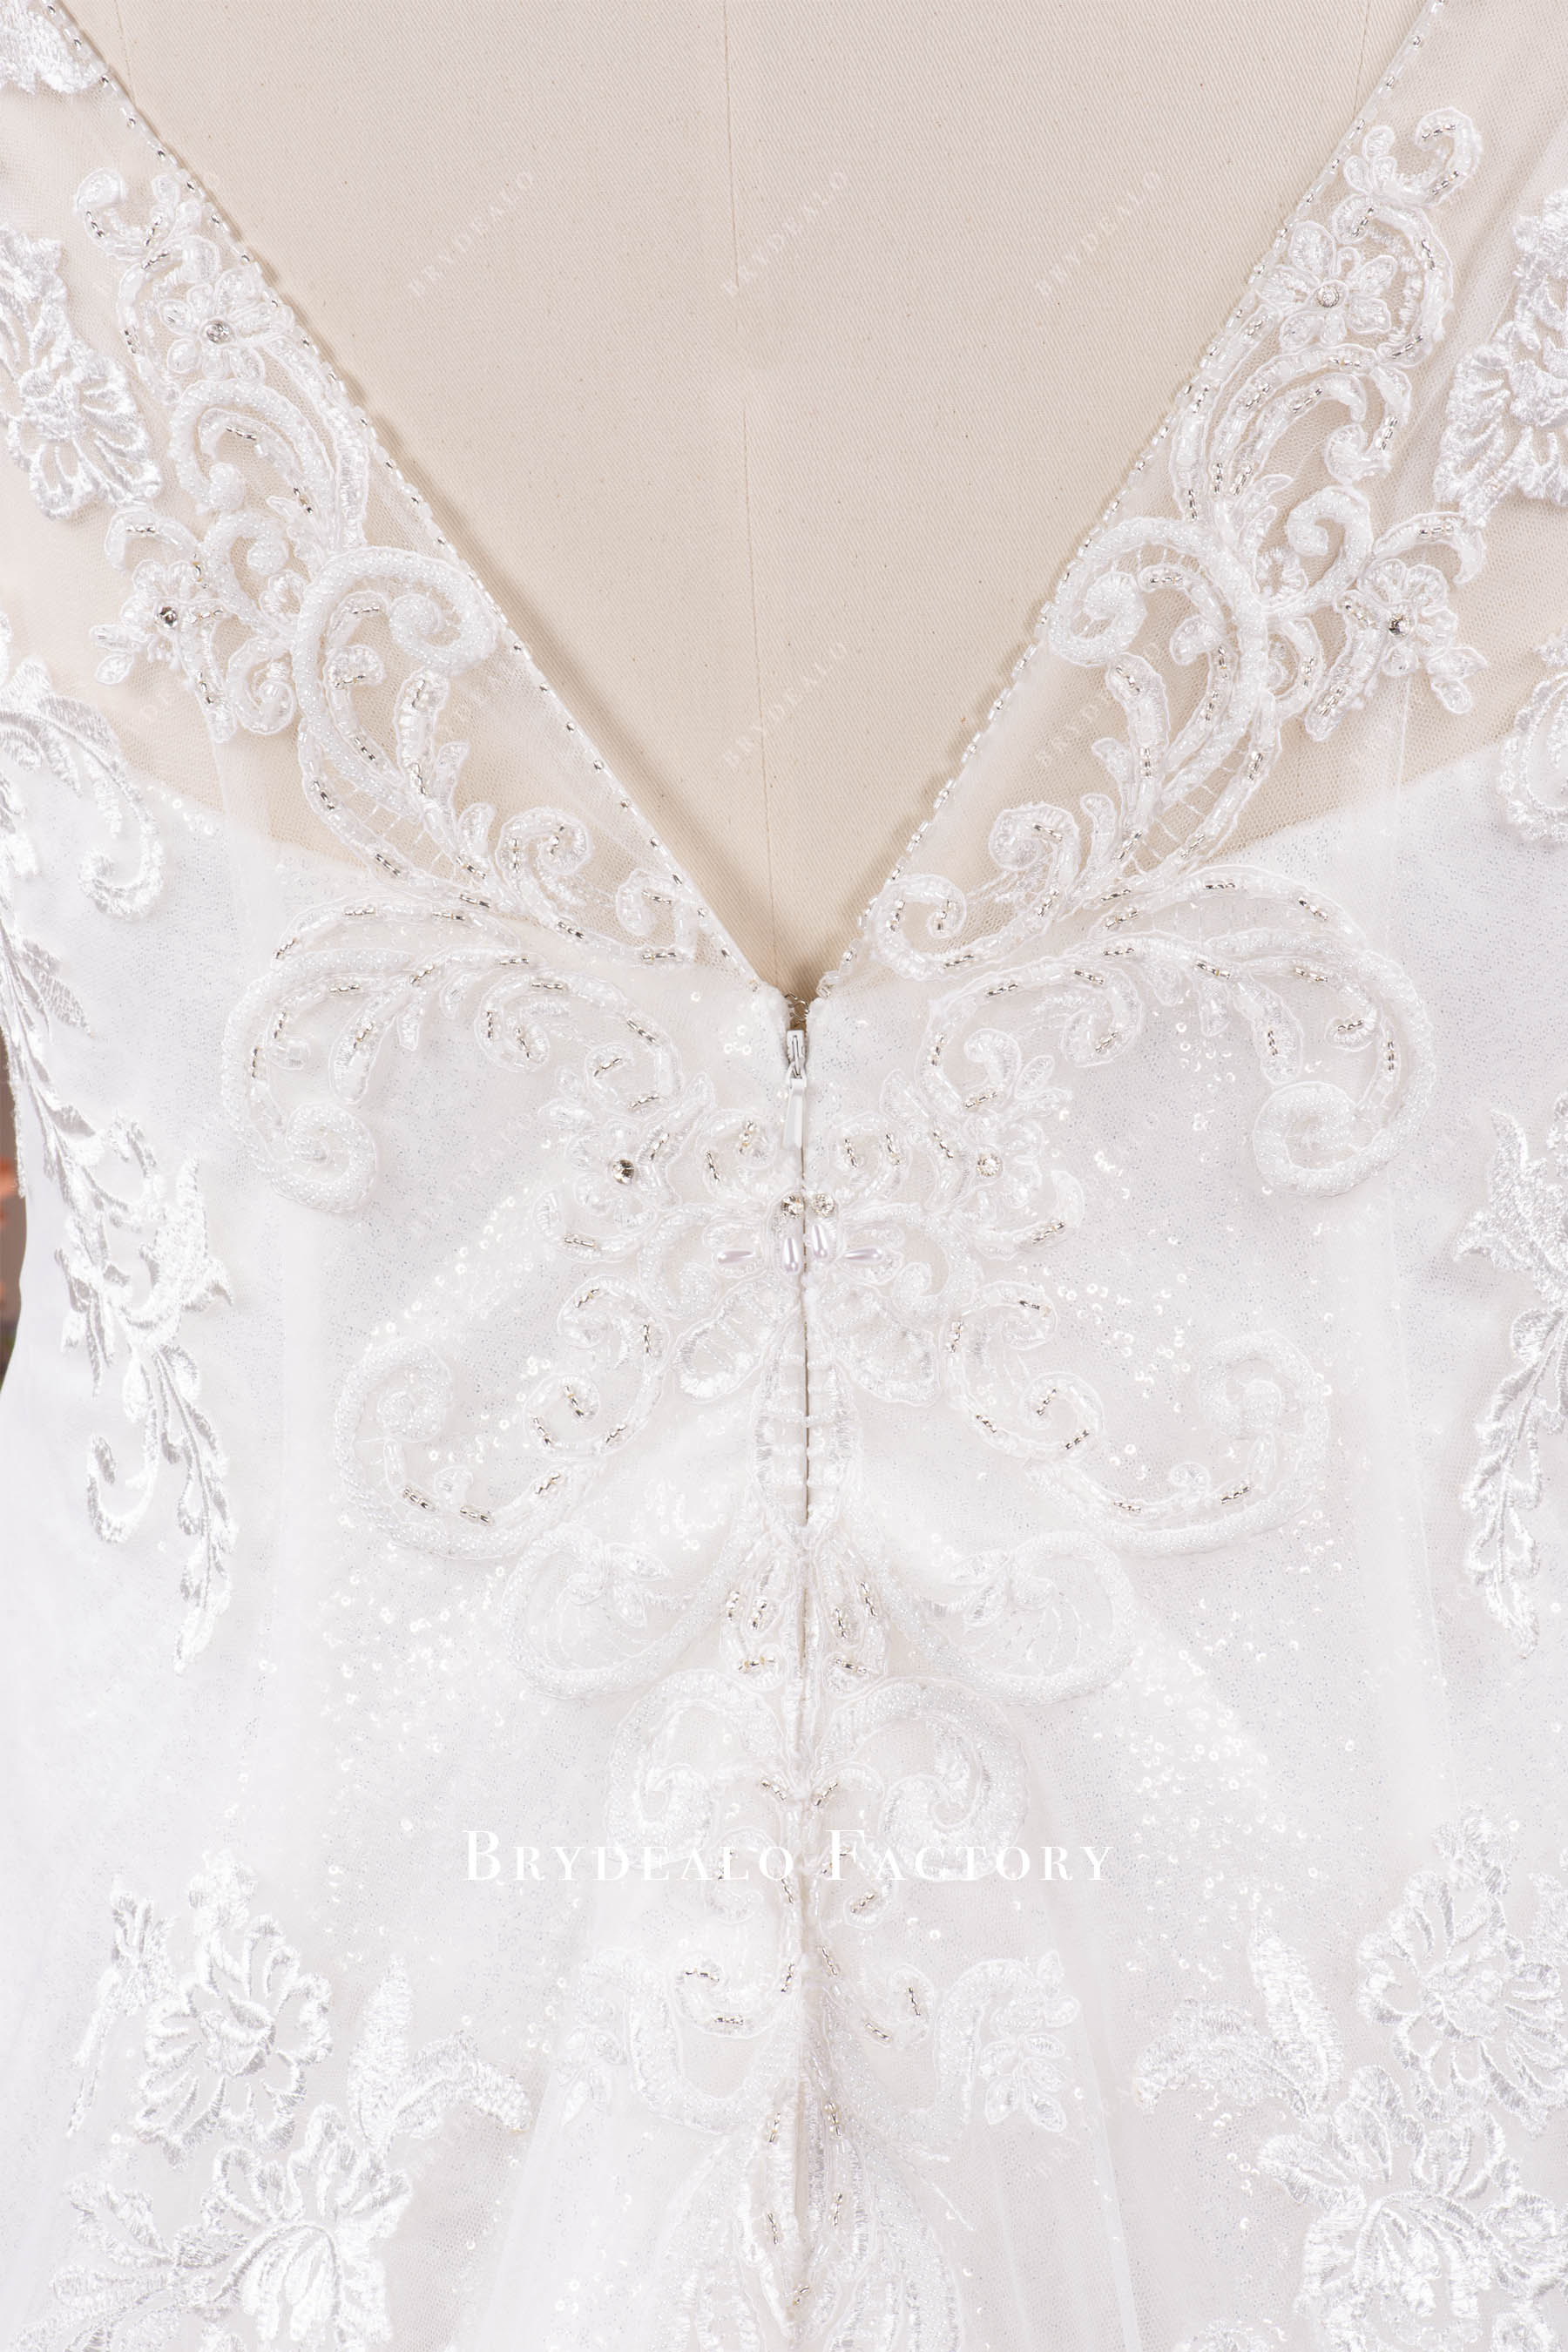 zipper closure sparkly wedding dress